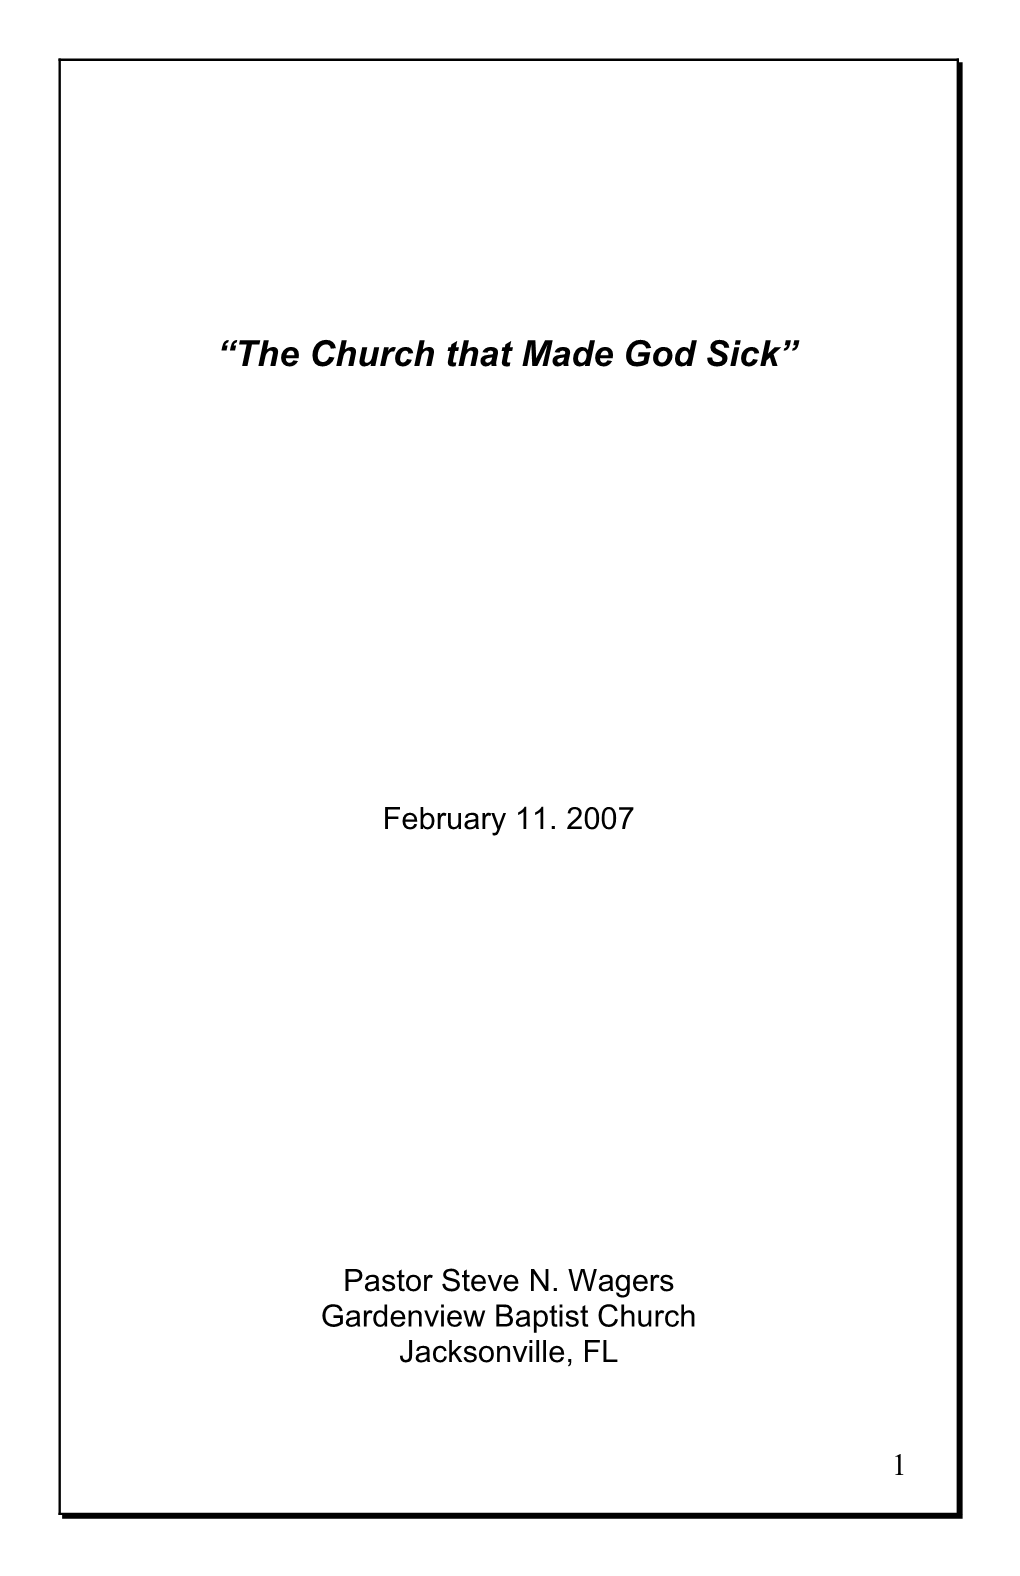 The Church That Made God Sick